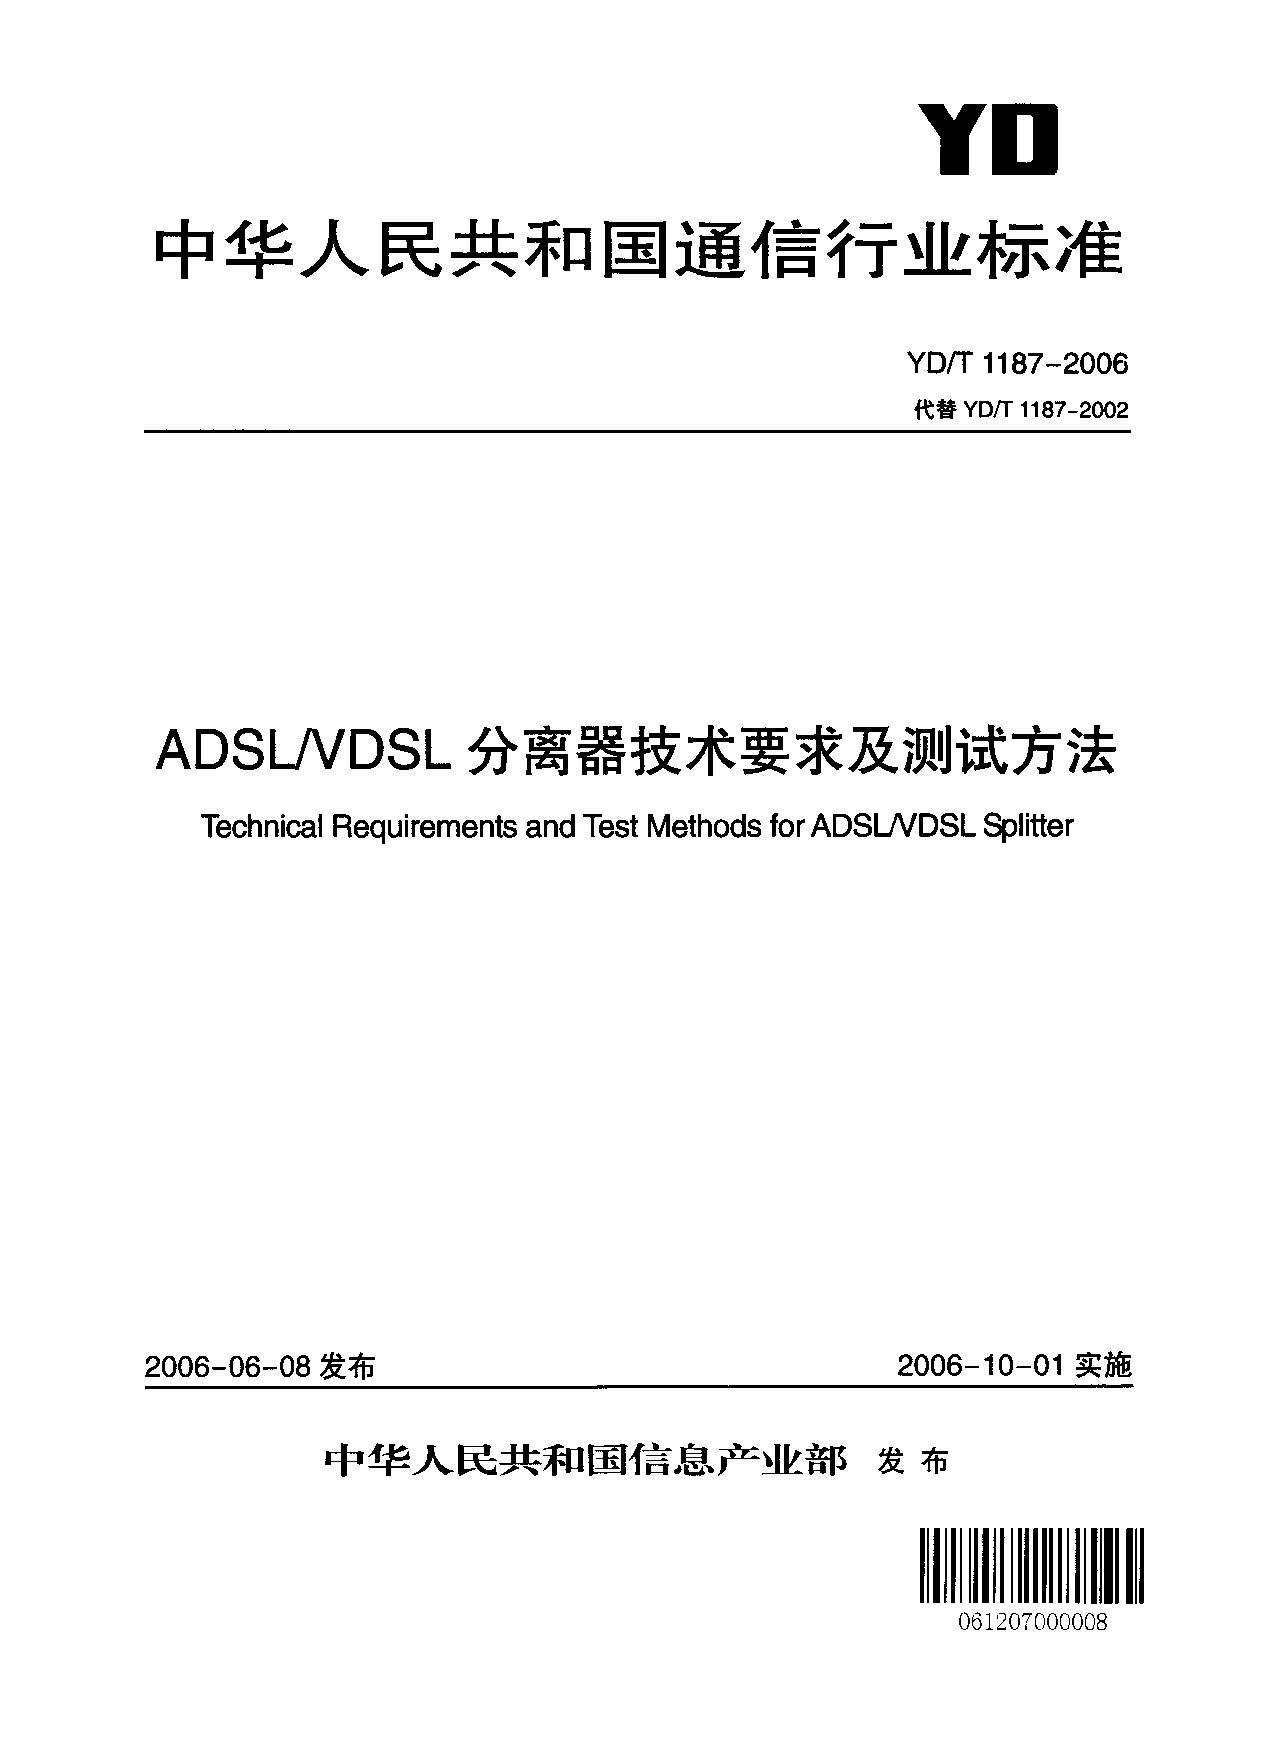 YD/T 1187-2006封面图